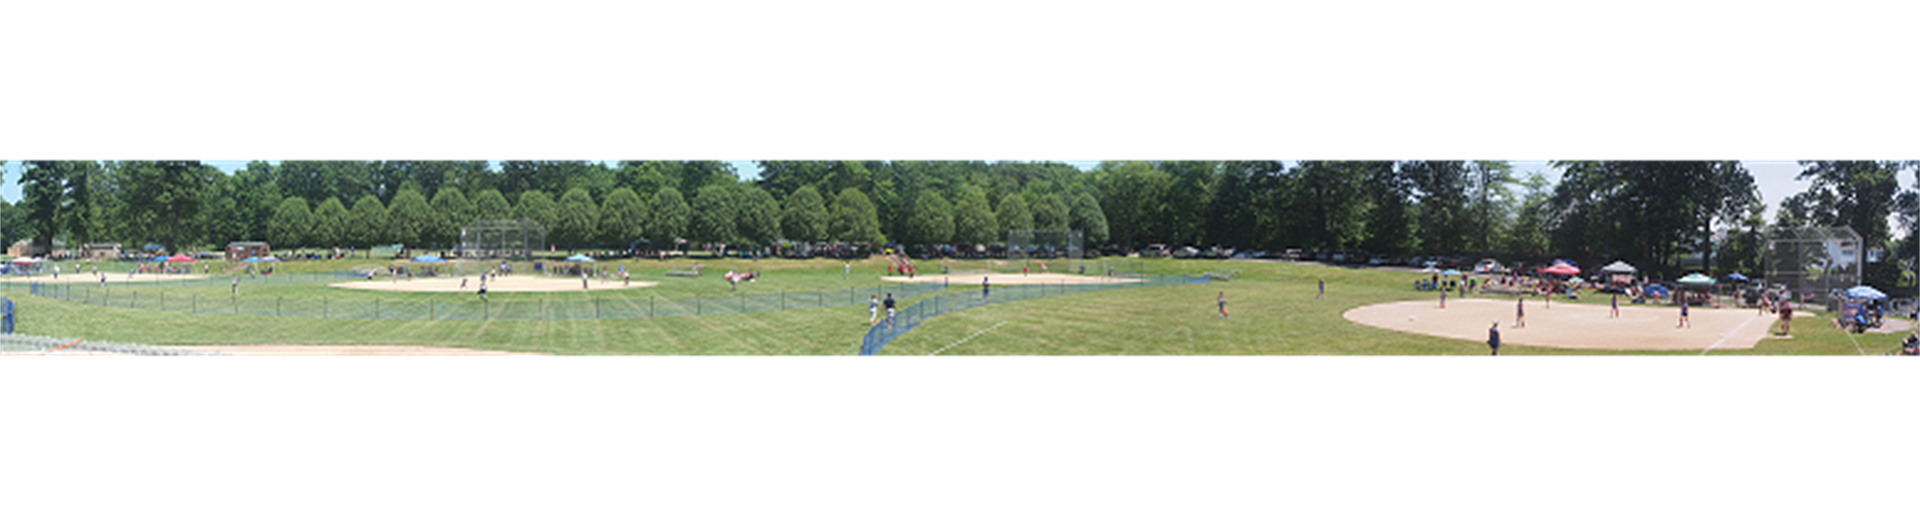 Panthorn Softball Fields Panorama